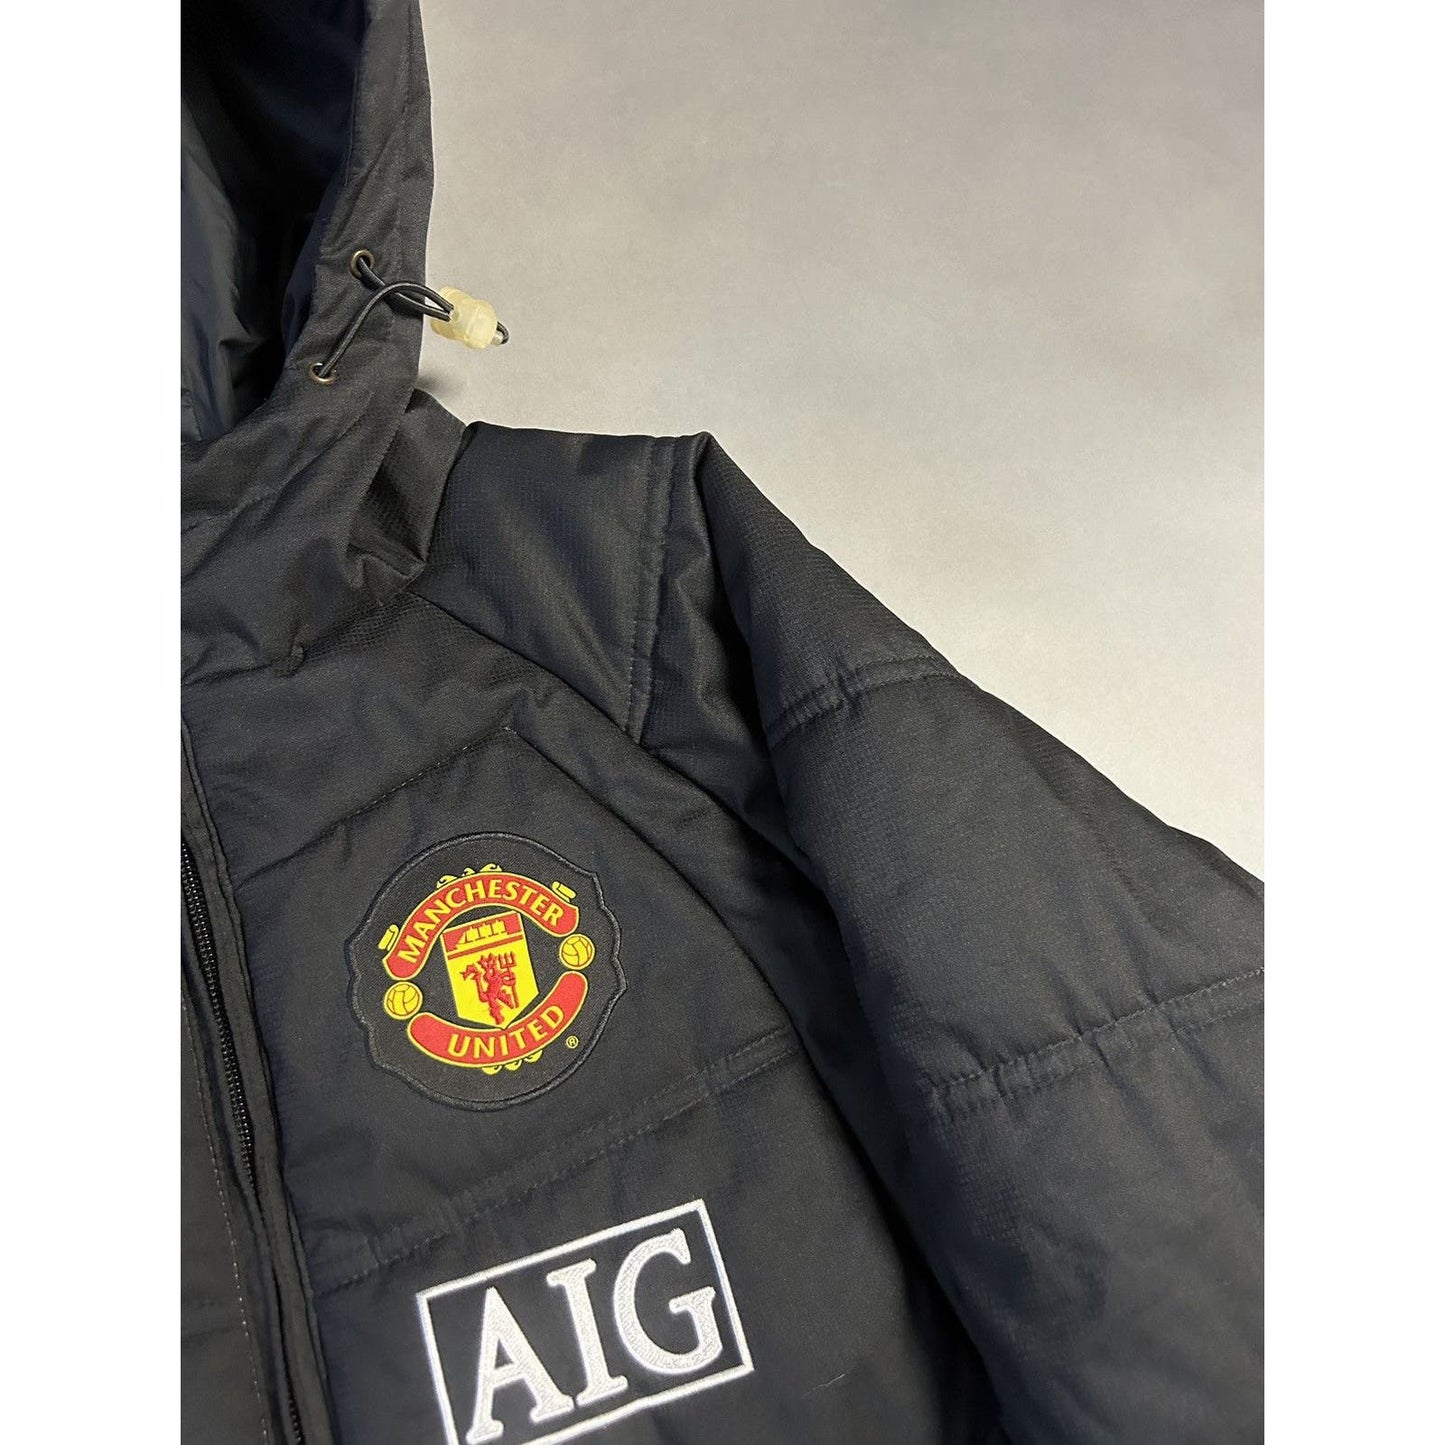 Man United Nike vintage puffer jacket black AIG Manchester